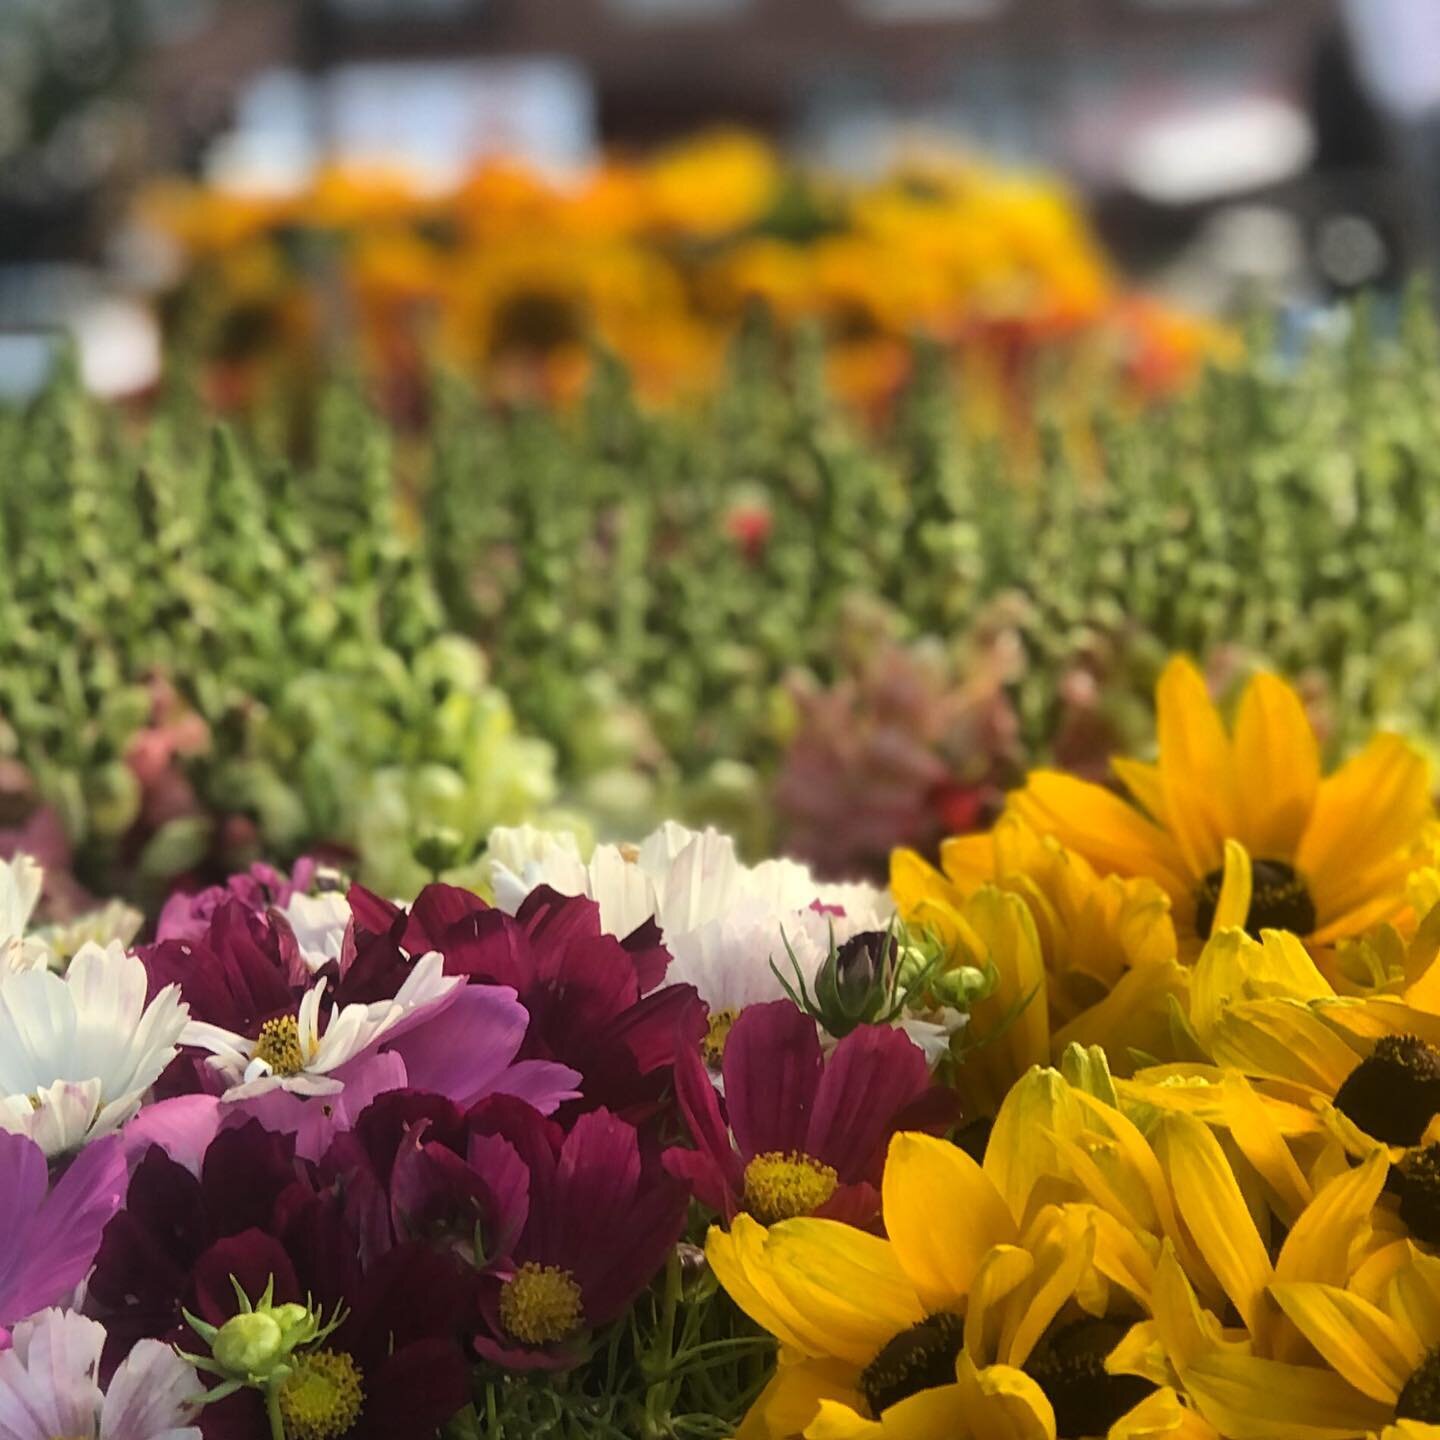 March of the farmers market flowers, Mount Pleasant, DC.
.
.
.
#igdc #theprettydistrict #farmtovase #mtpdc #flowersoldiers